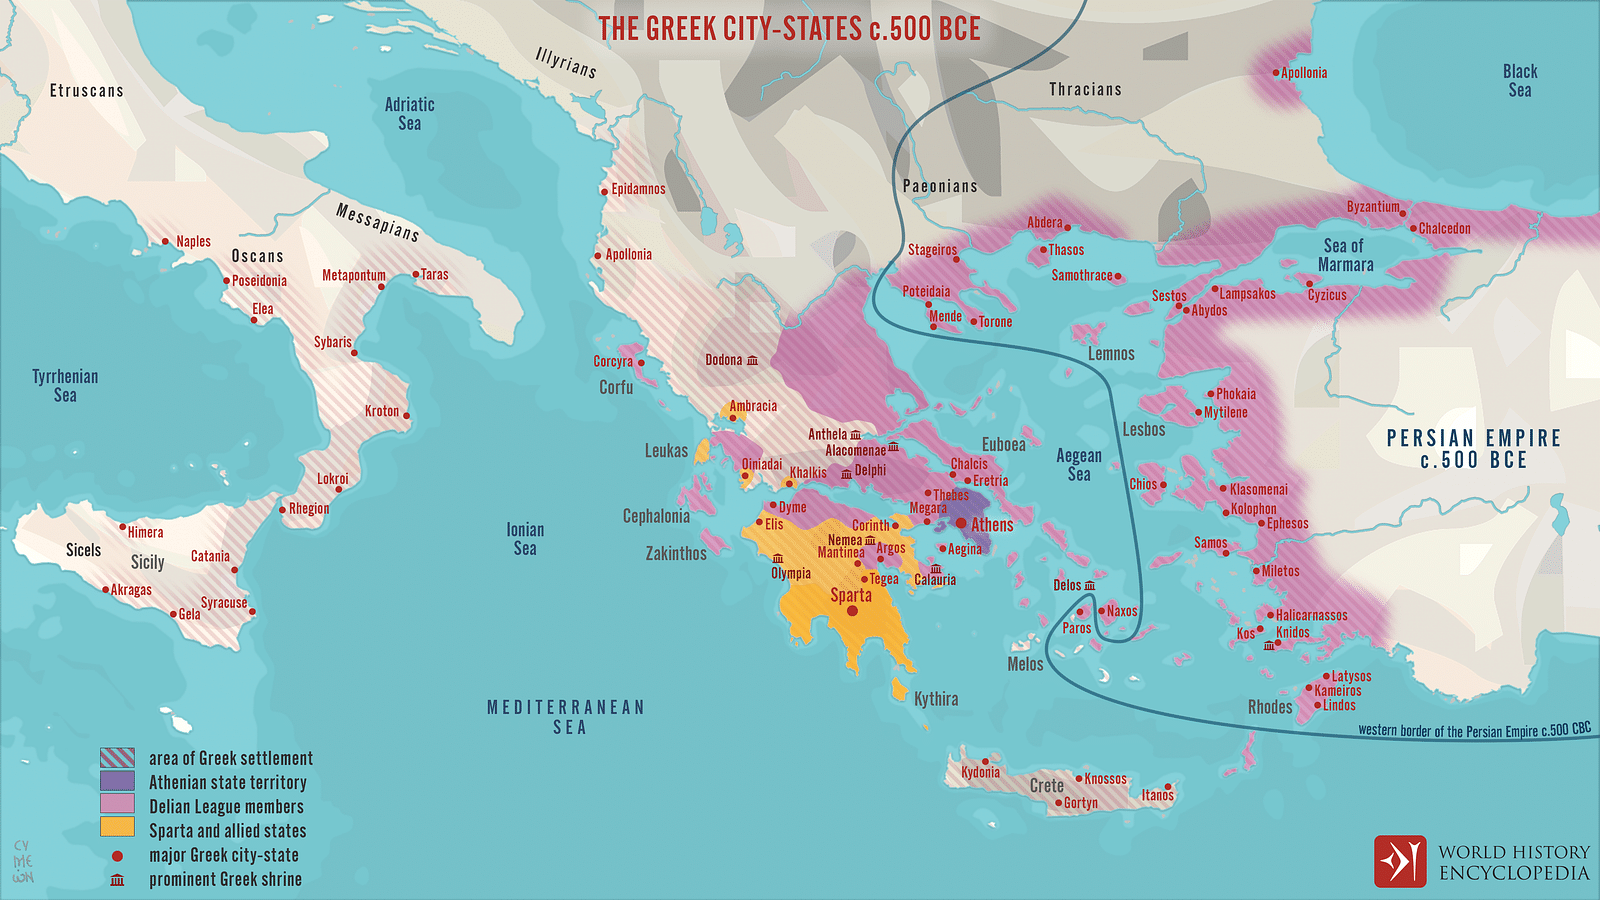 Greece, Islands, Cities, Language, & History